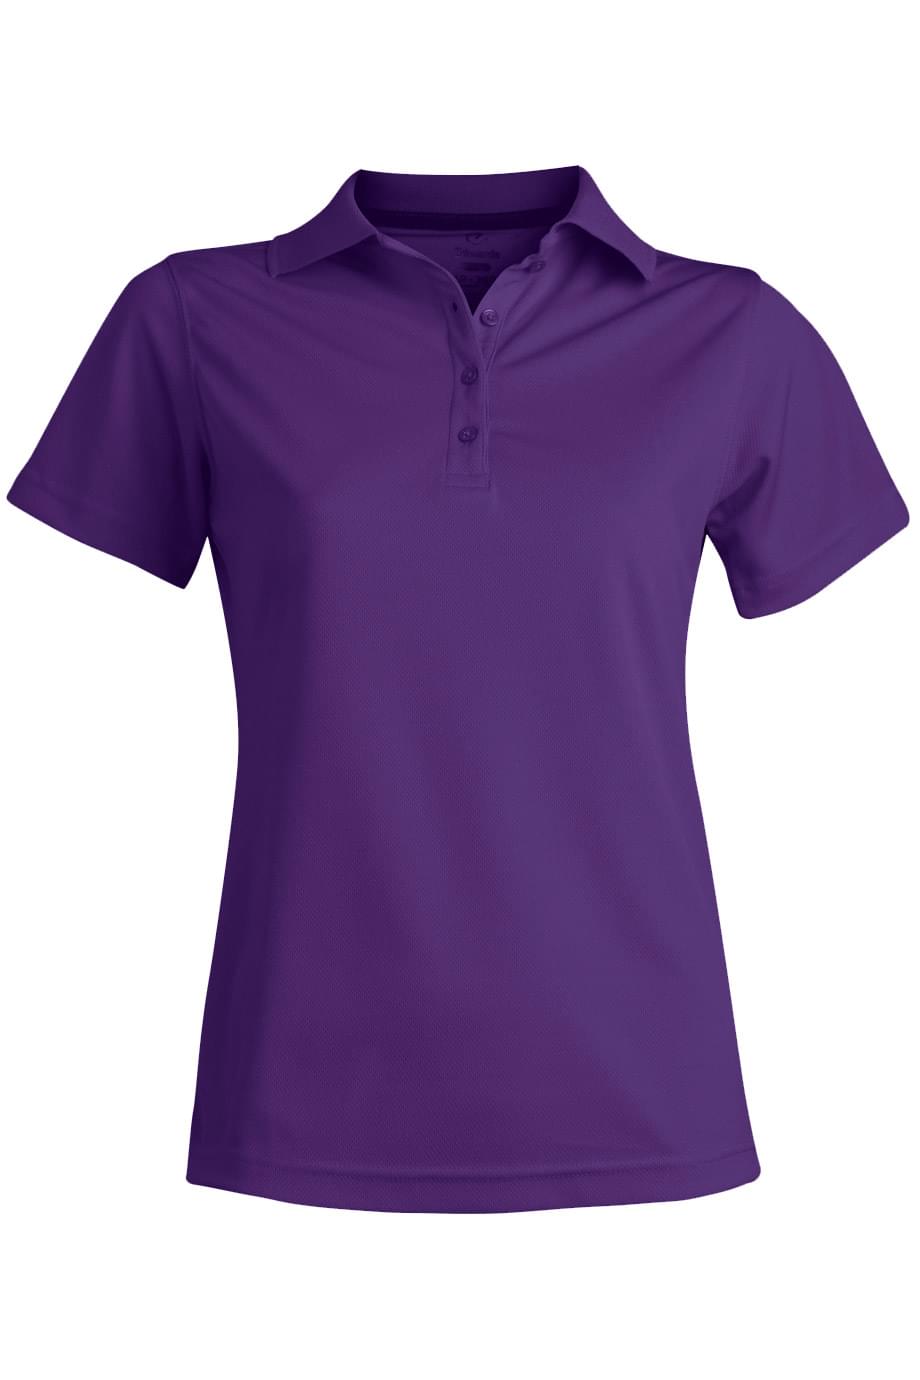 Edwards Garment 5576 - Women's Dry-Mesh Hi-Performance Polo